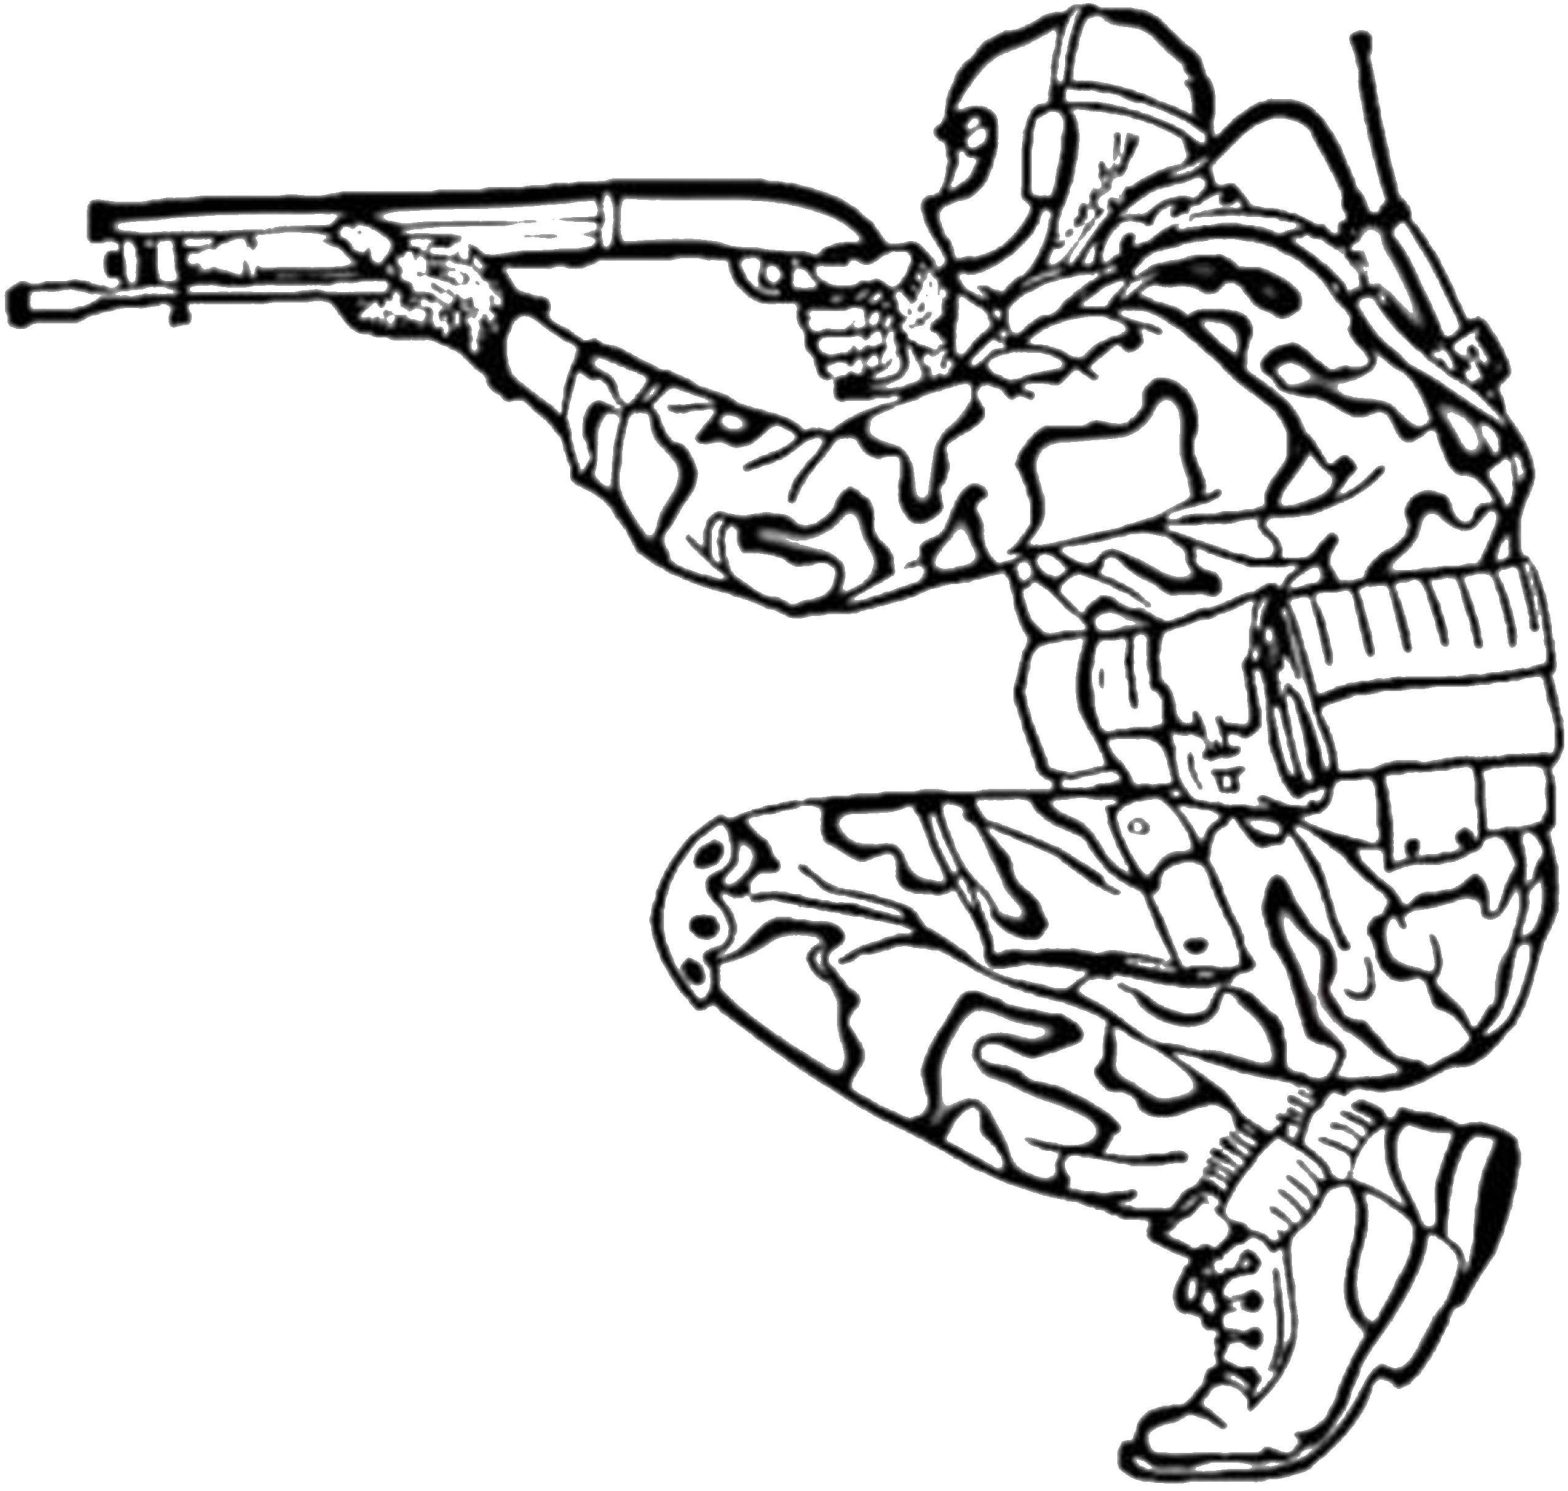 Раскраска для военного снайпера (снайпер)